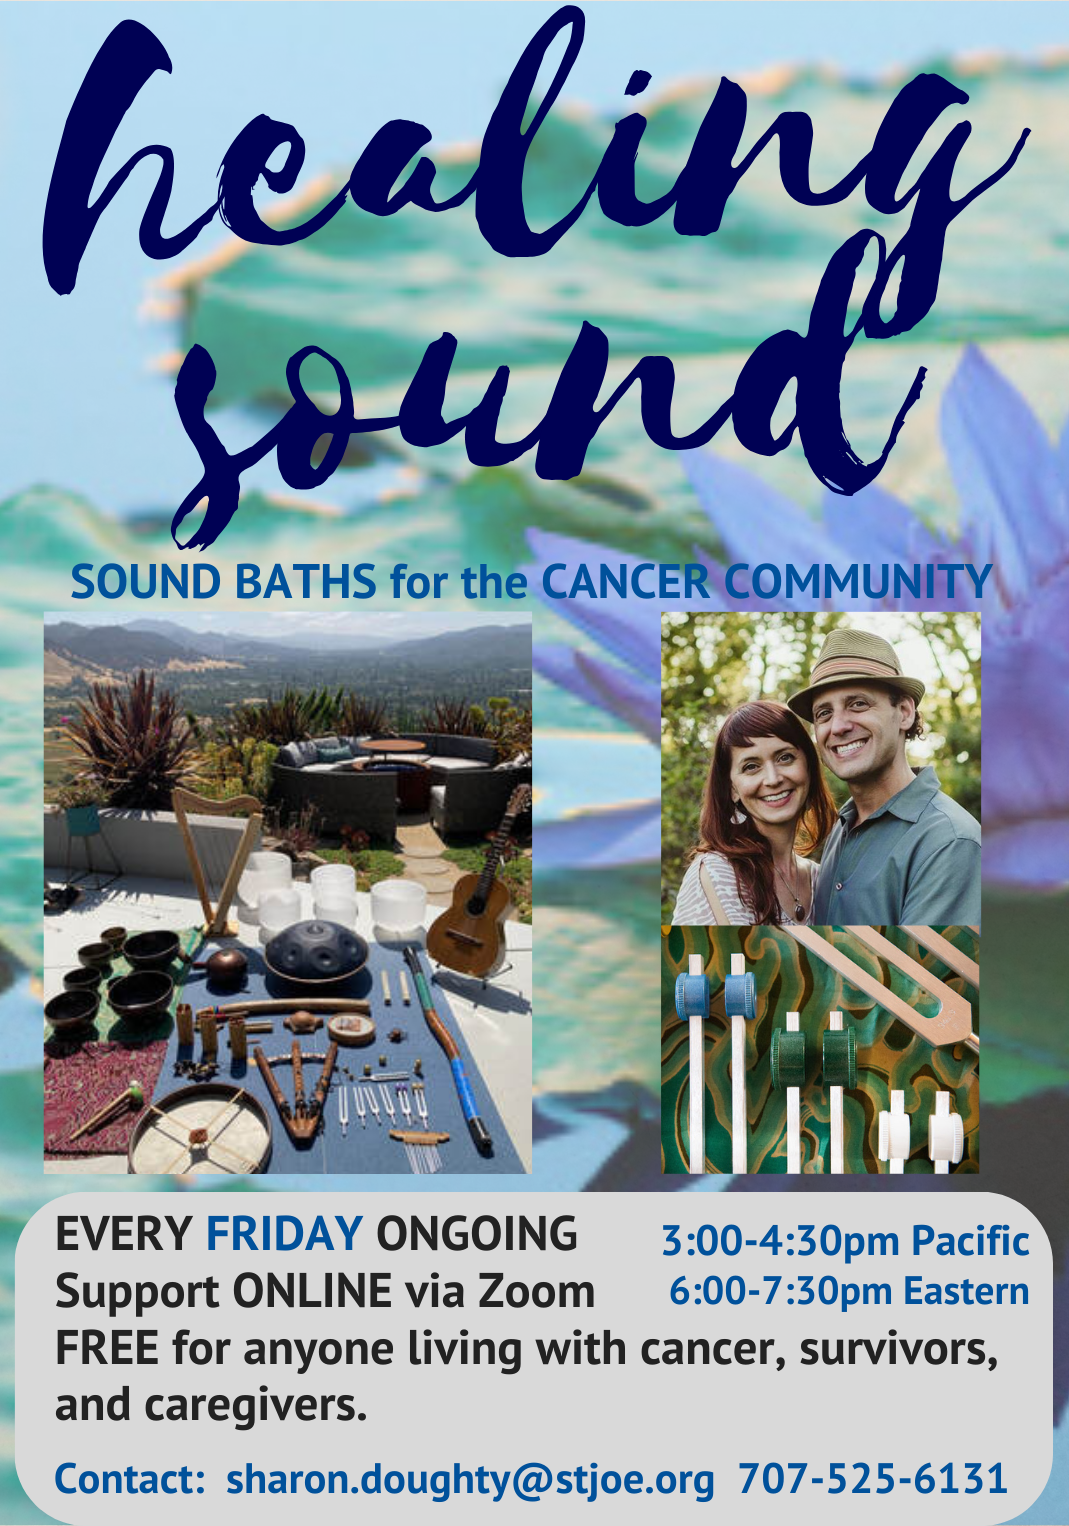 Sound bath, sound healing for cancer patients, online, Santa Rosa